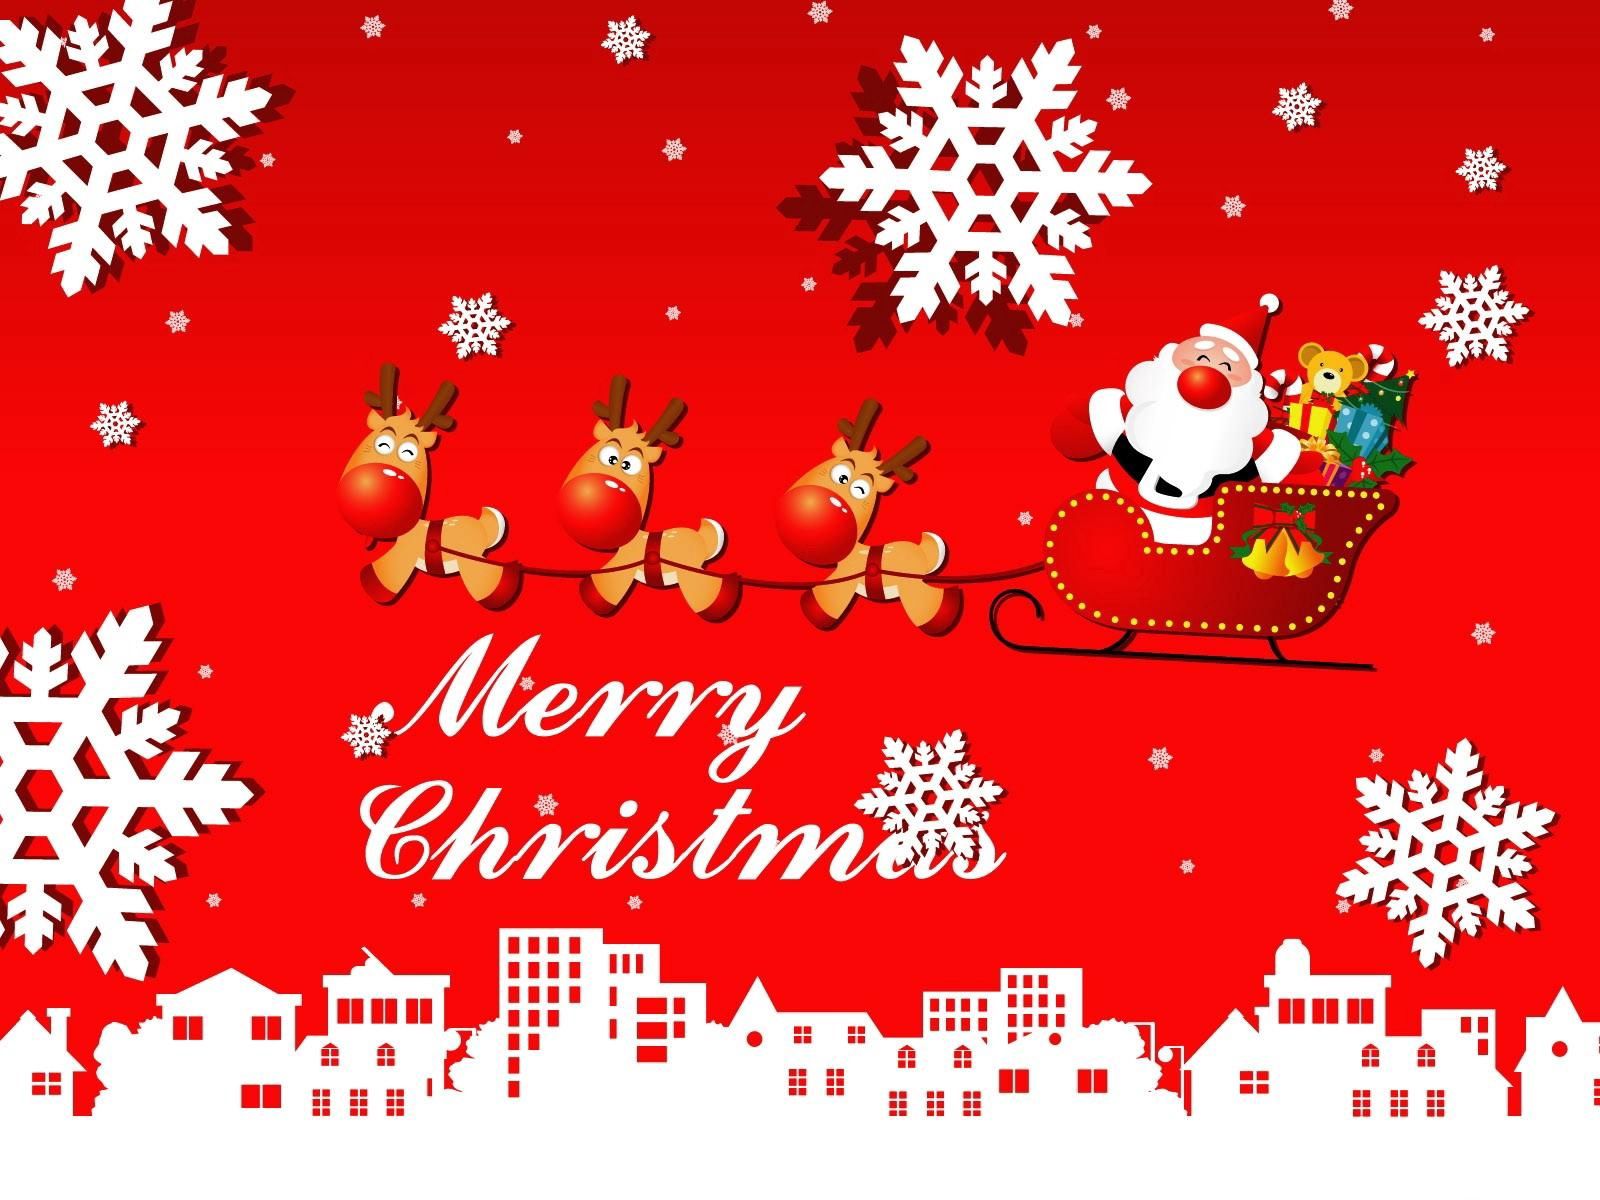 santa claus, snowflakes, presents, holidays, deers, city, christmas, sleigh, sledge, gifts